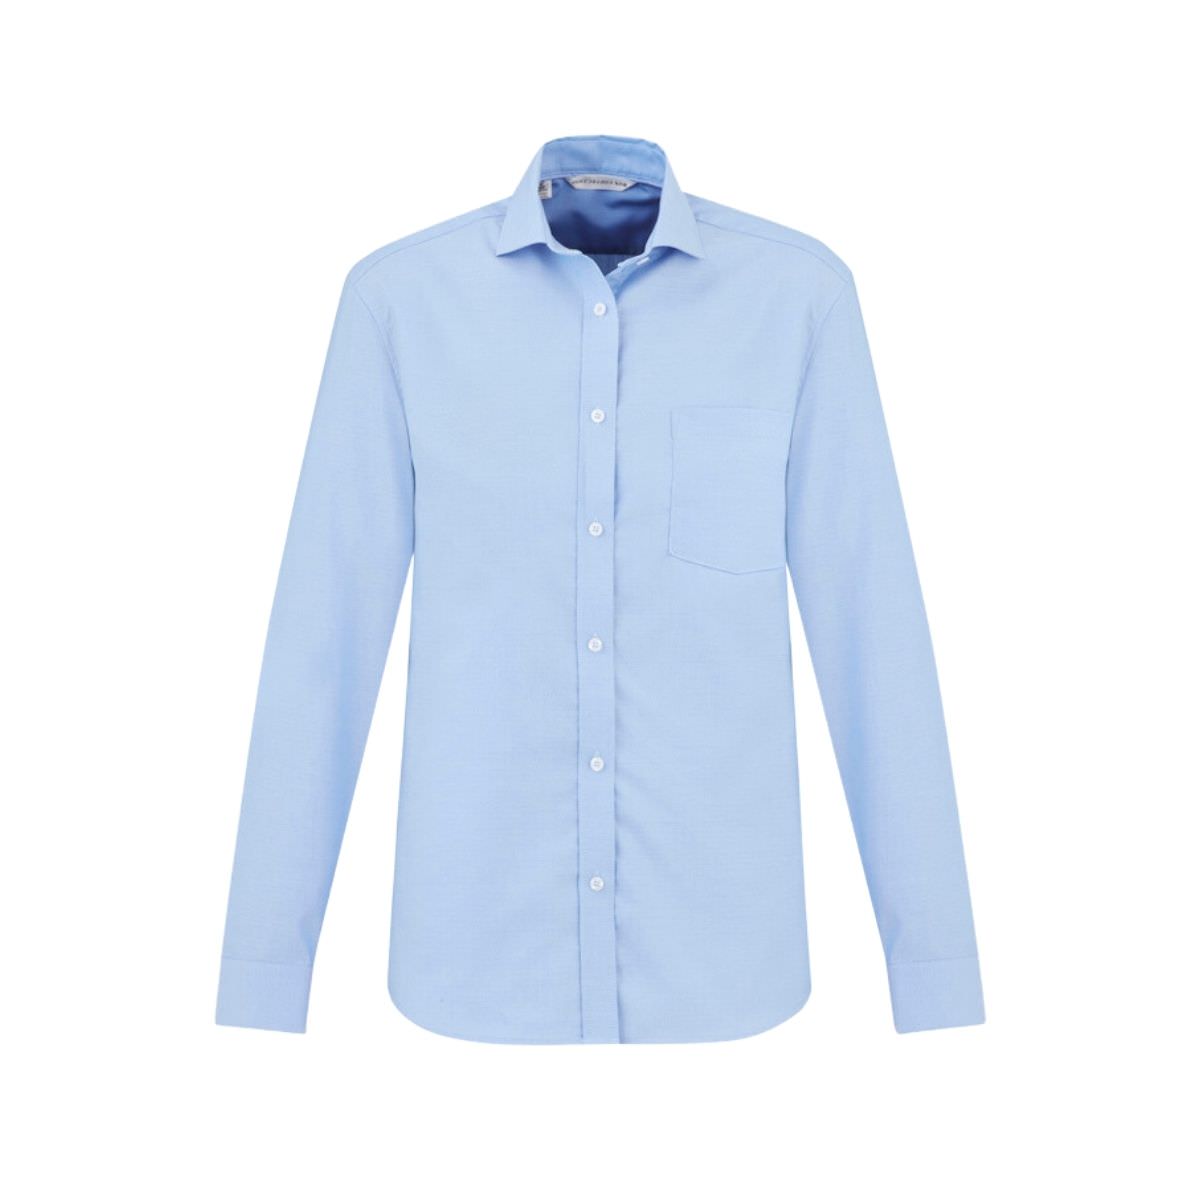 Biz Collection Men's Regent Short Sleeve Shirt S912ML